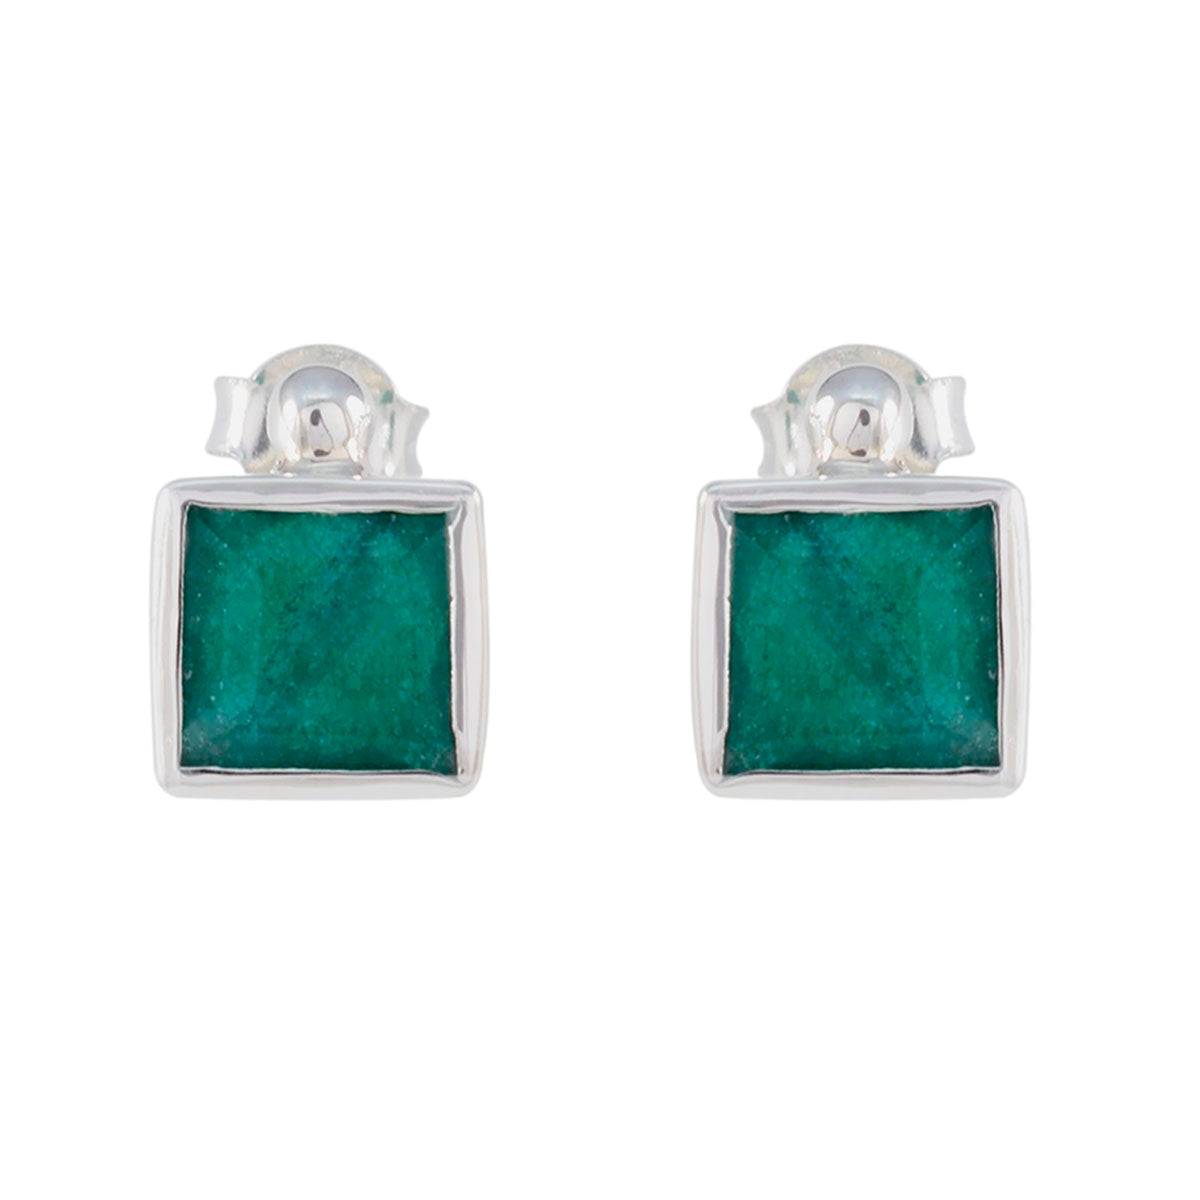 Riyo Charming 925 Sterling Silver Earring For Female Indian Emerald Earring Bezel Setting Green Earring Stud Earring